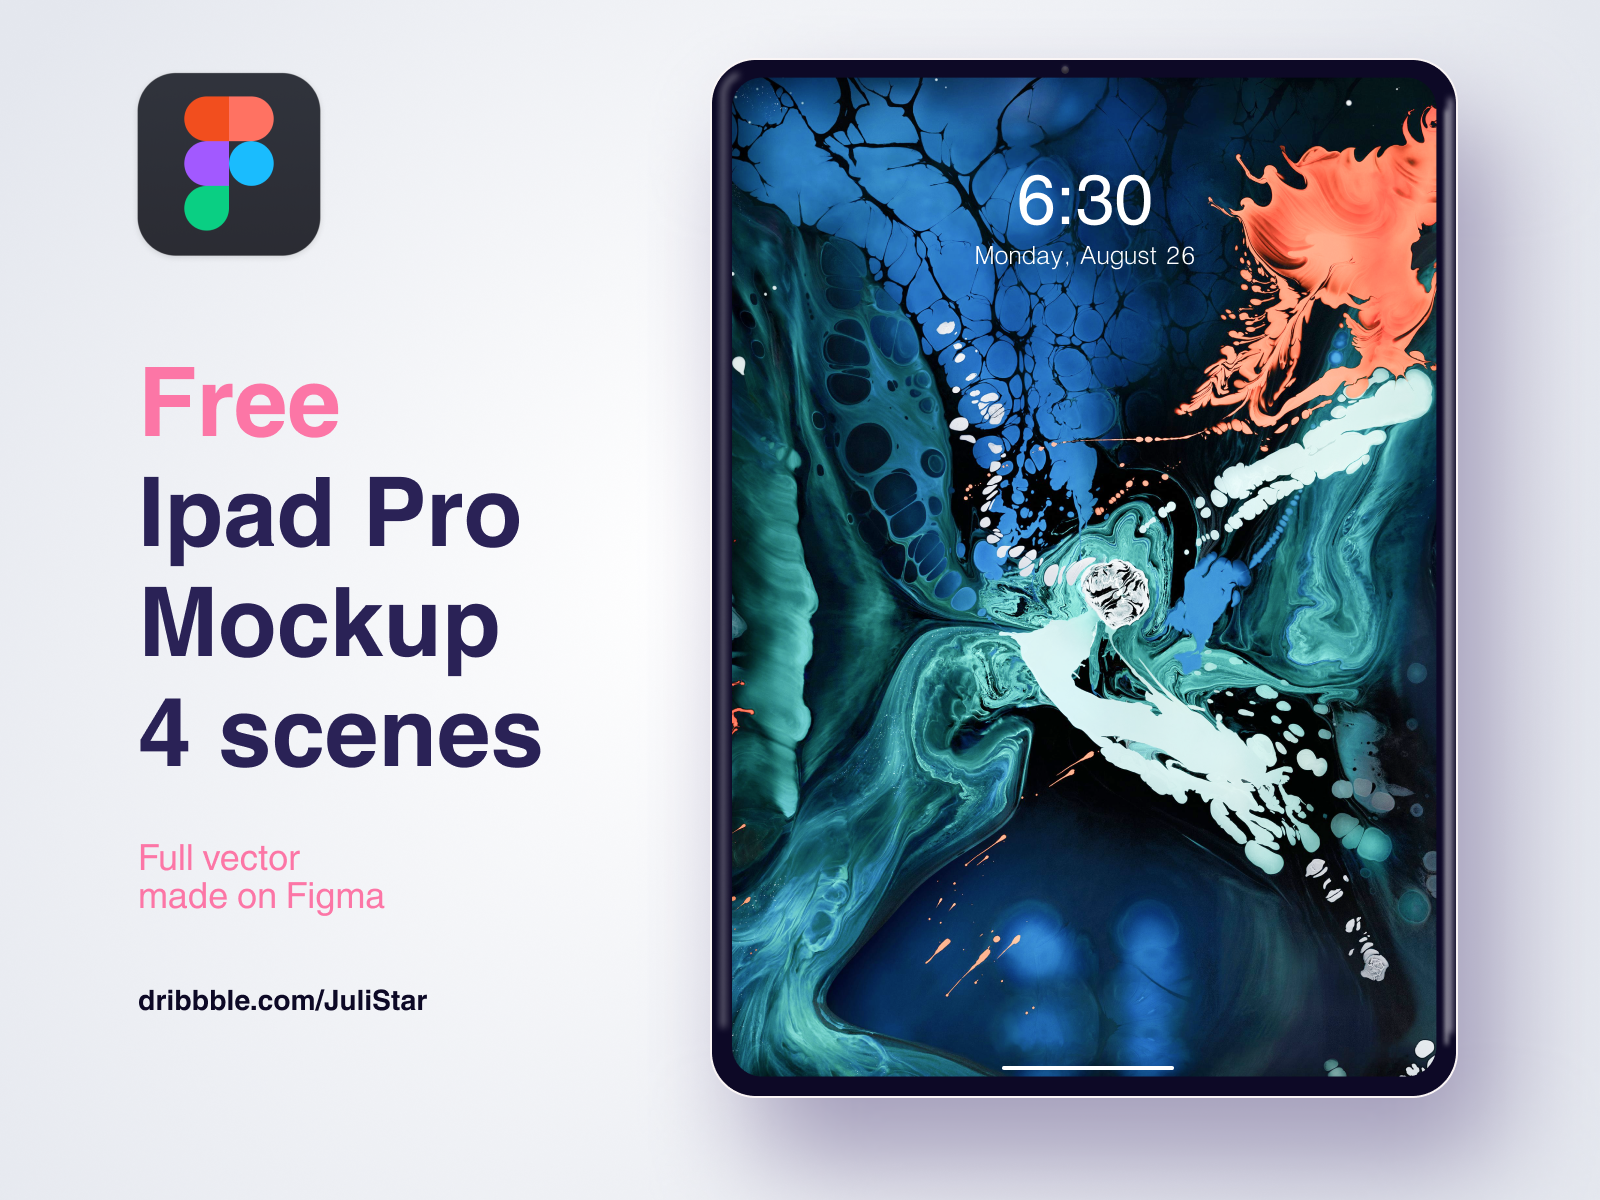 Download Ipad Pro 2019 Free mock up by Juli Star ⚡ on Dribbble